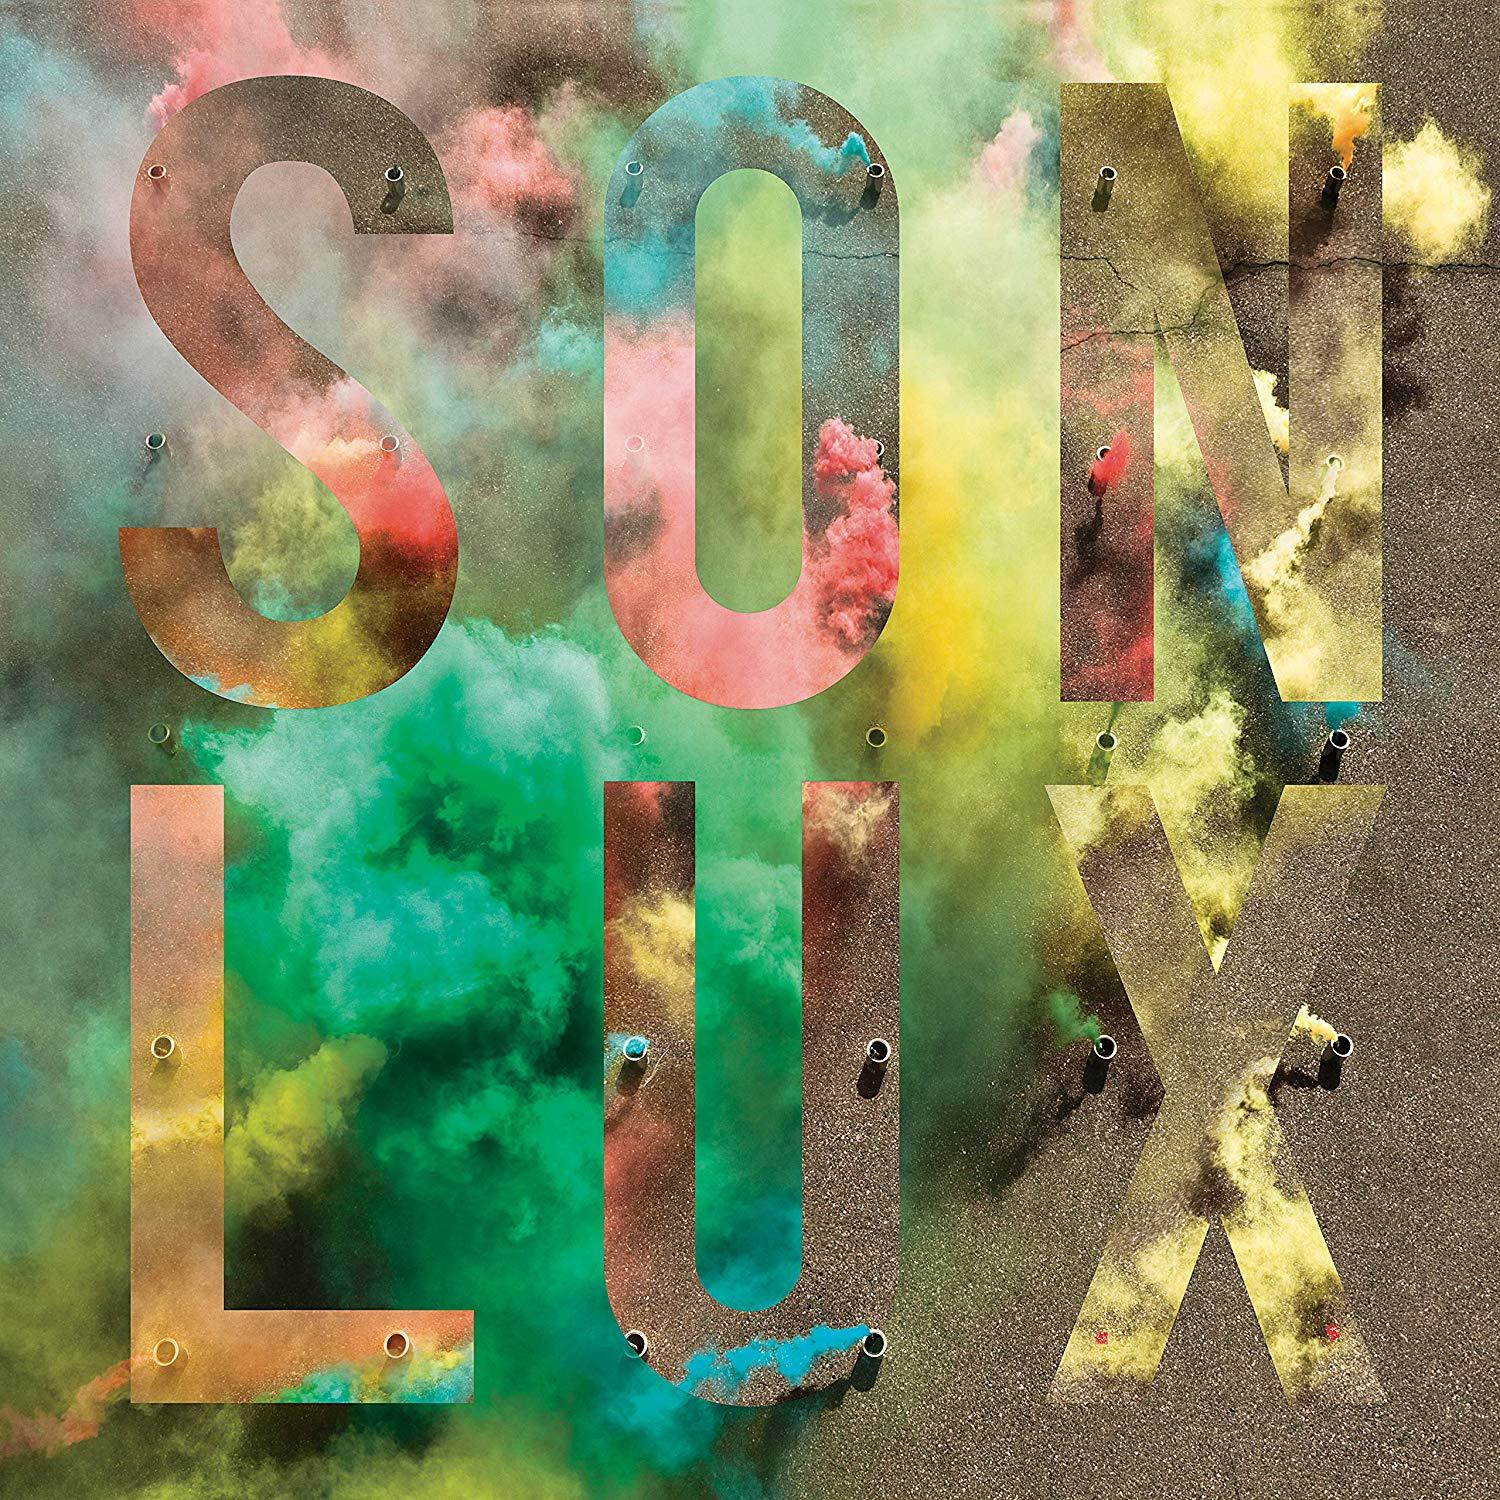 (Green - Lux Rising Vinyl - Reissue) We Son (Vinyl) Are